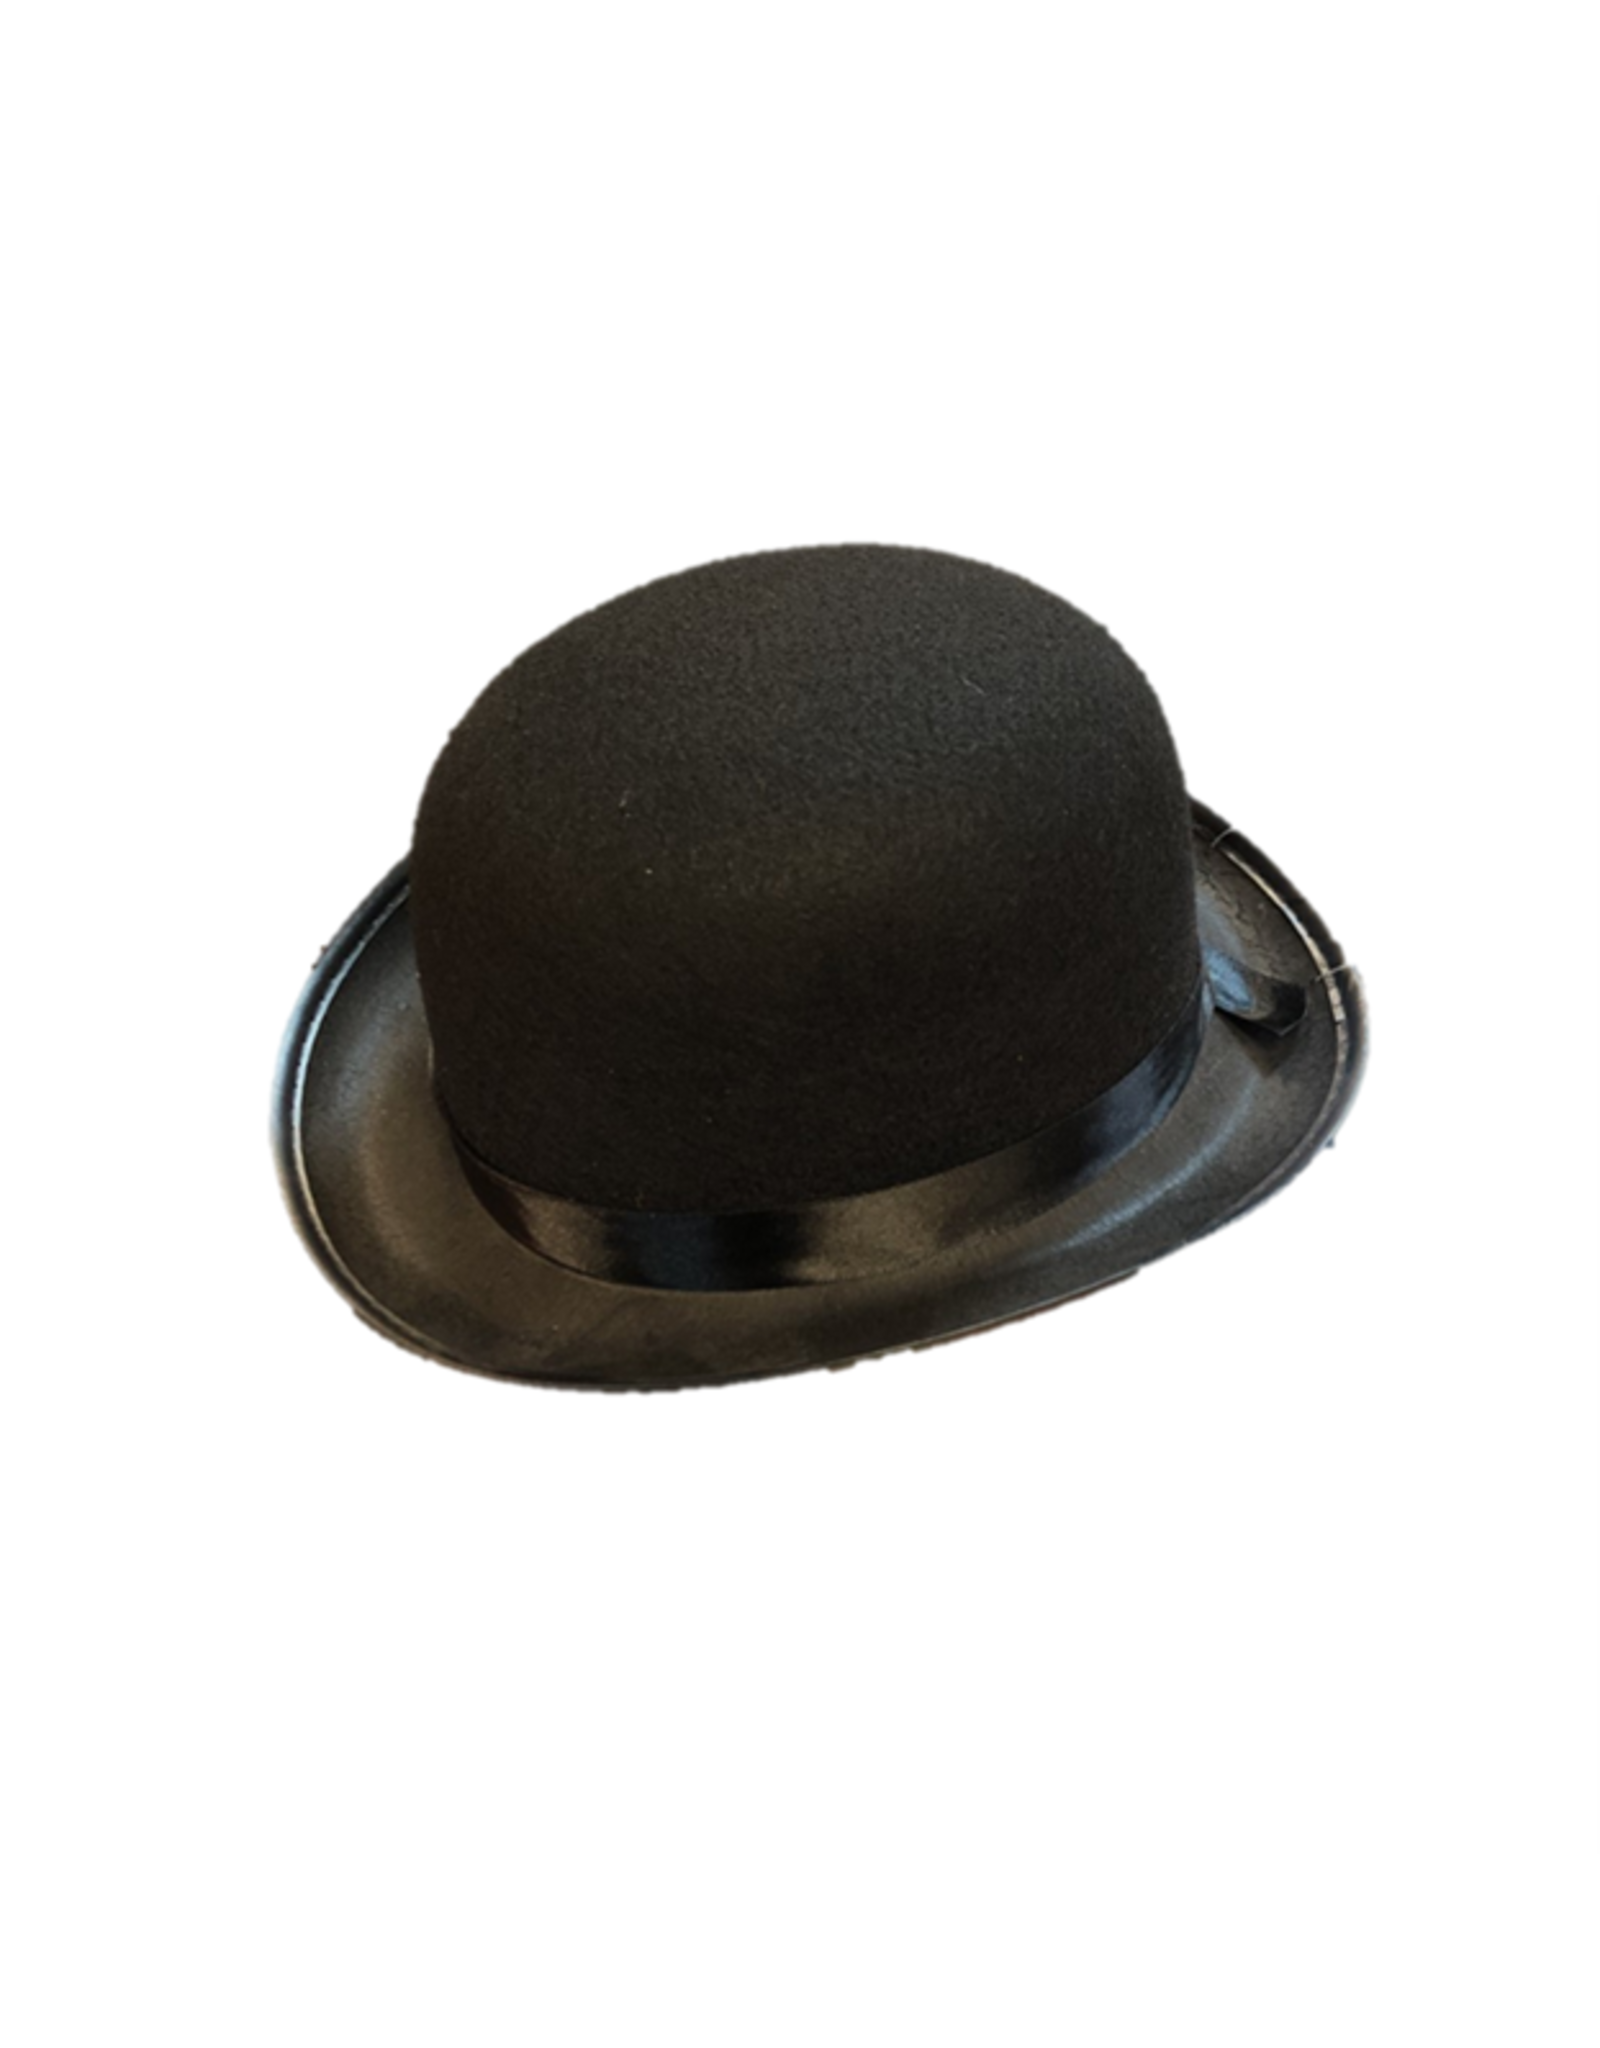 HM Smallwares Derby Hat Black